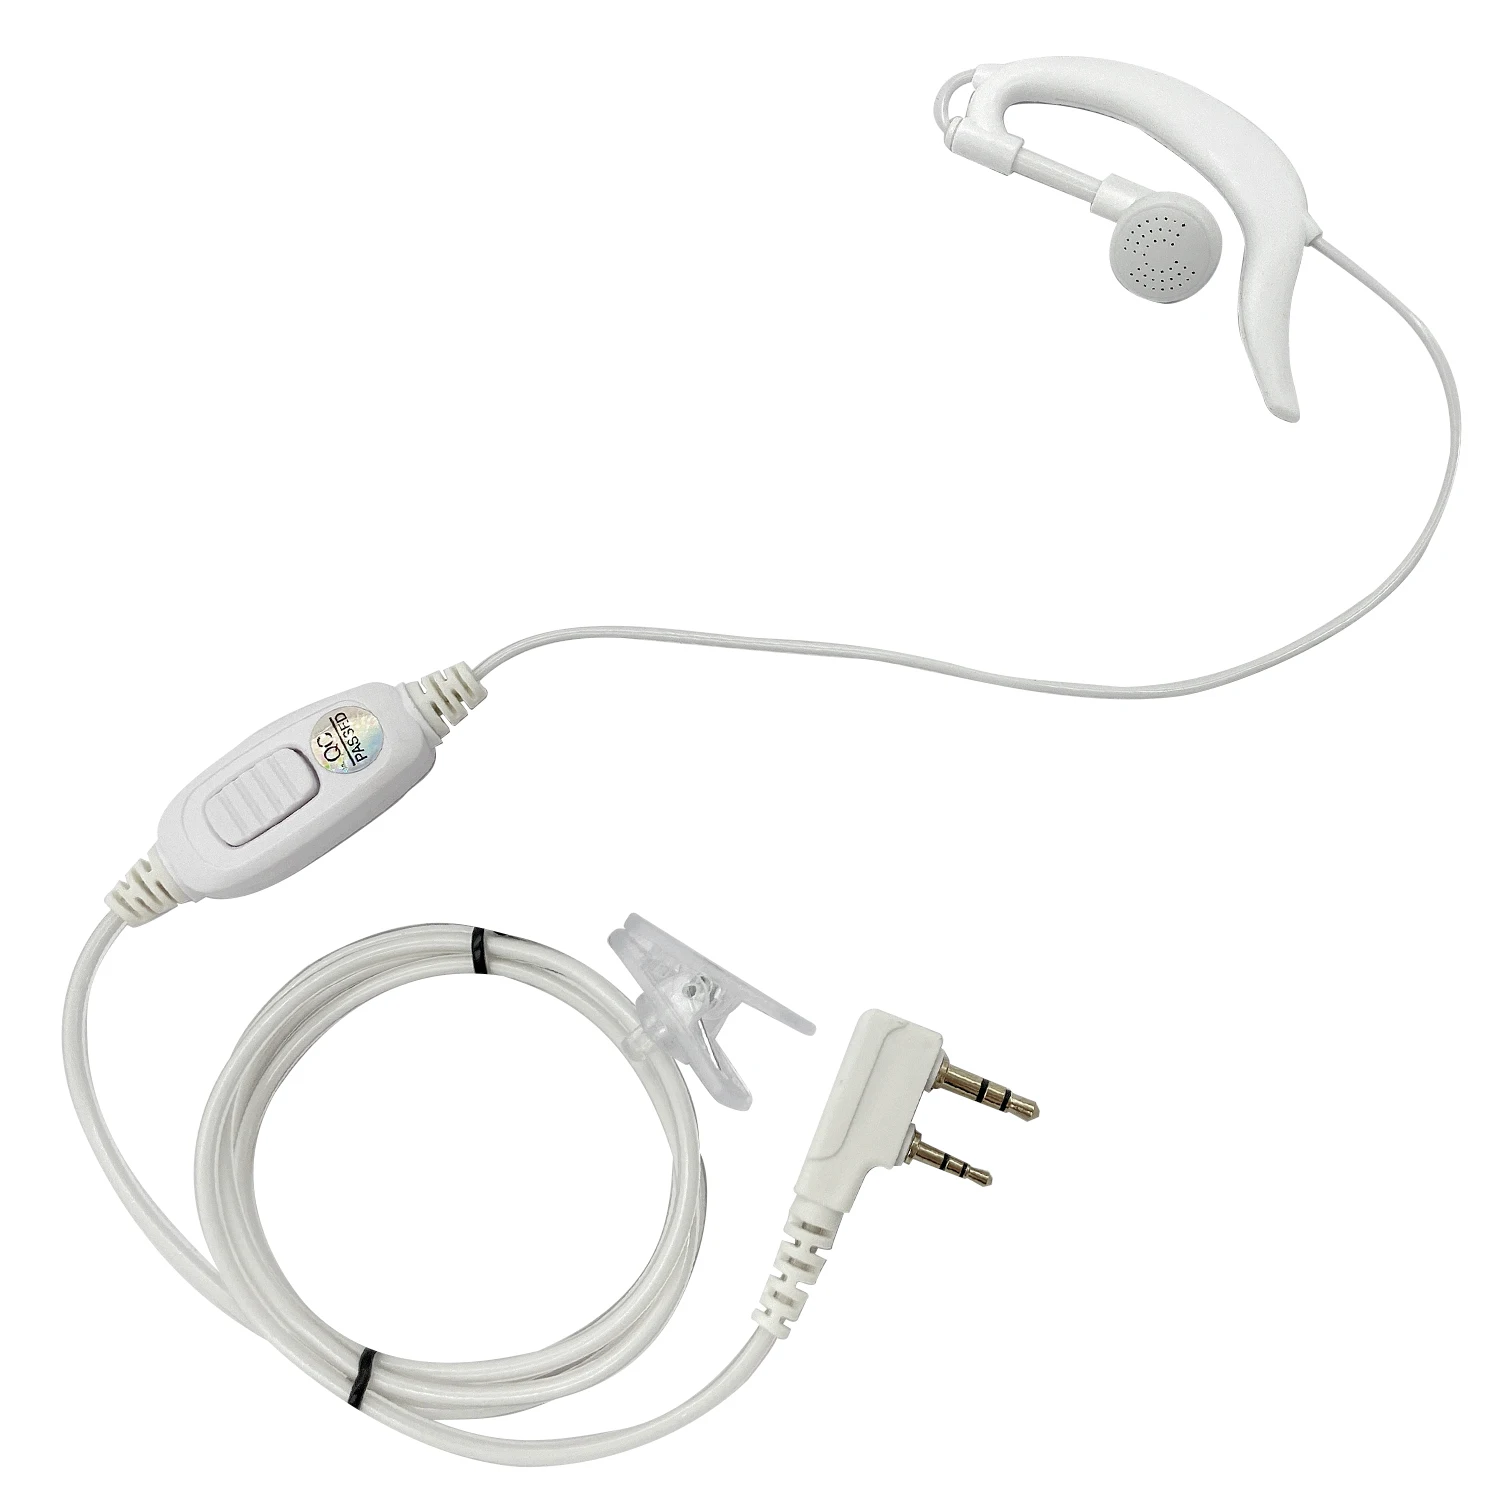 Type G ears hang walkie talkie headset Earpiece for baofeng BF-T3, BF-888S, BF-F8HP, BF-F9, BF-F9 V2+, RD-5 two way radios white